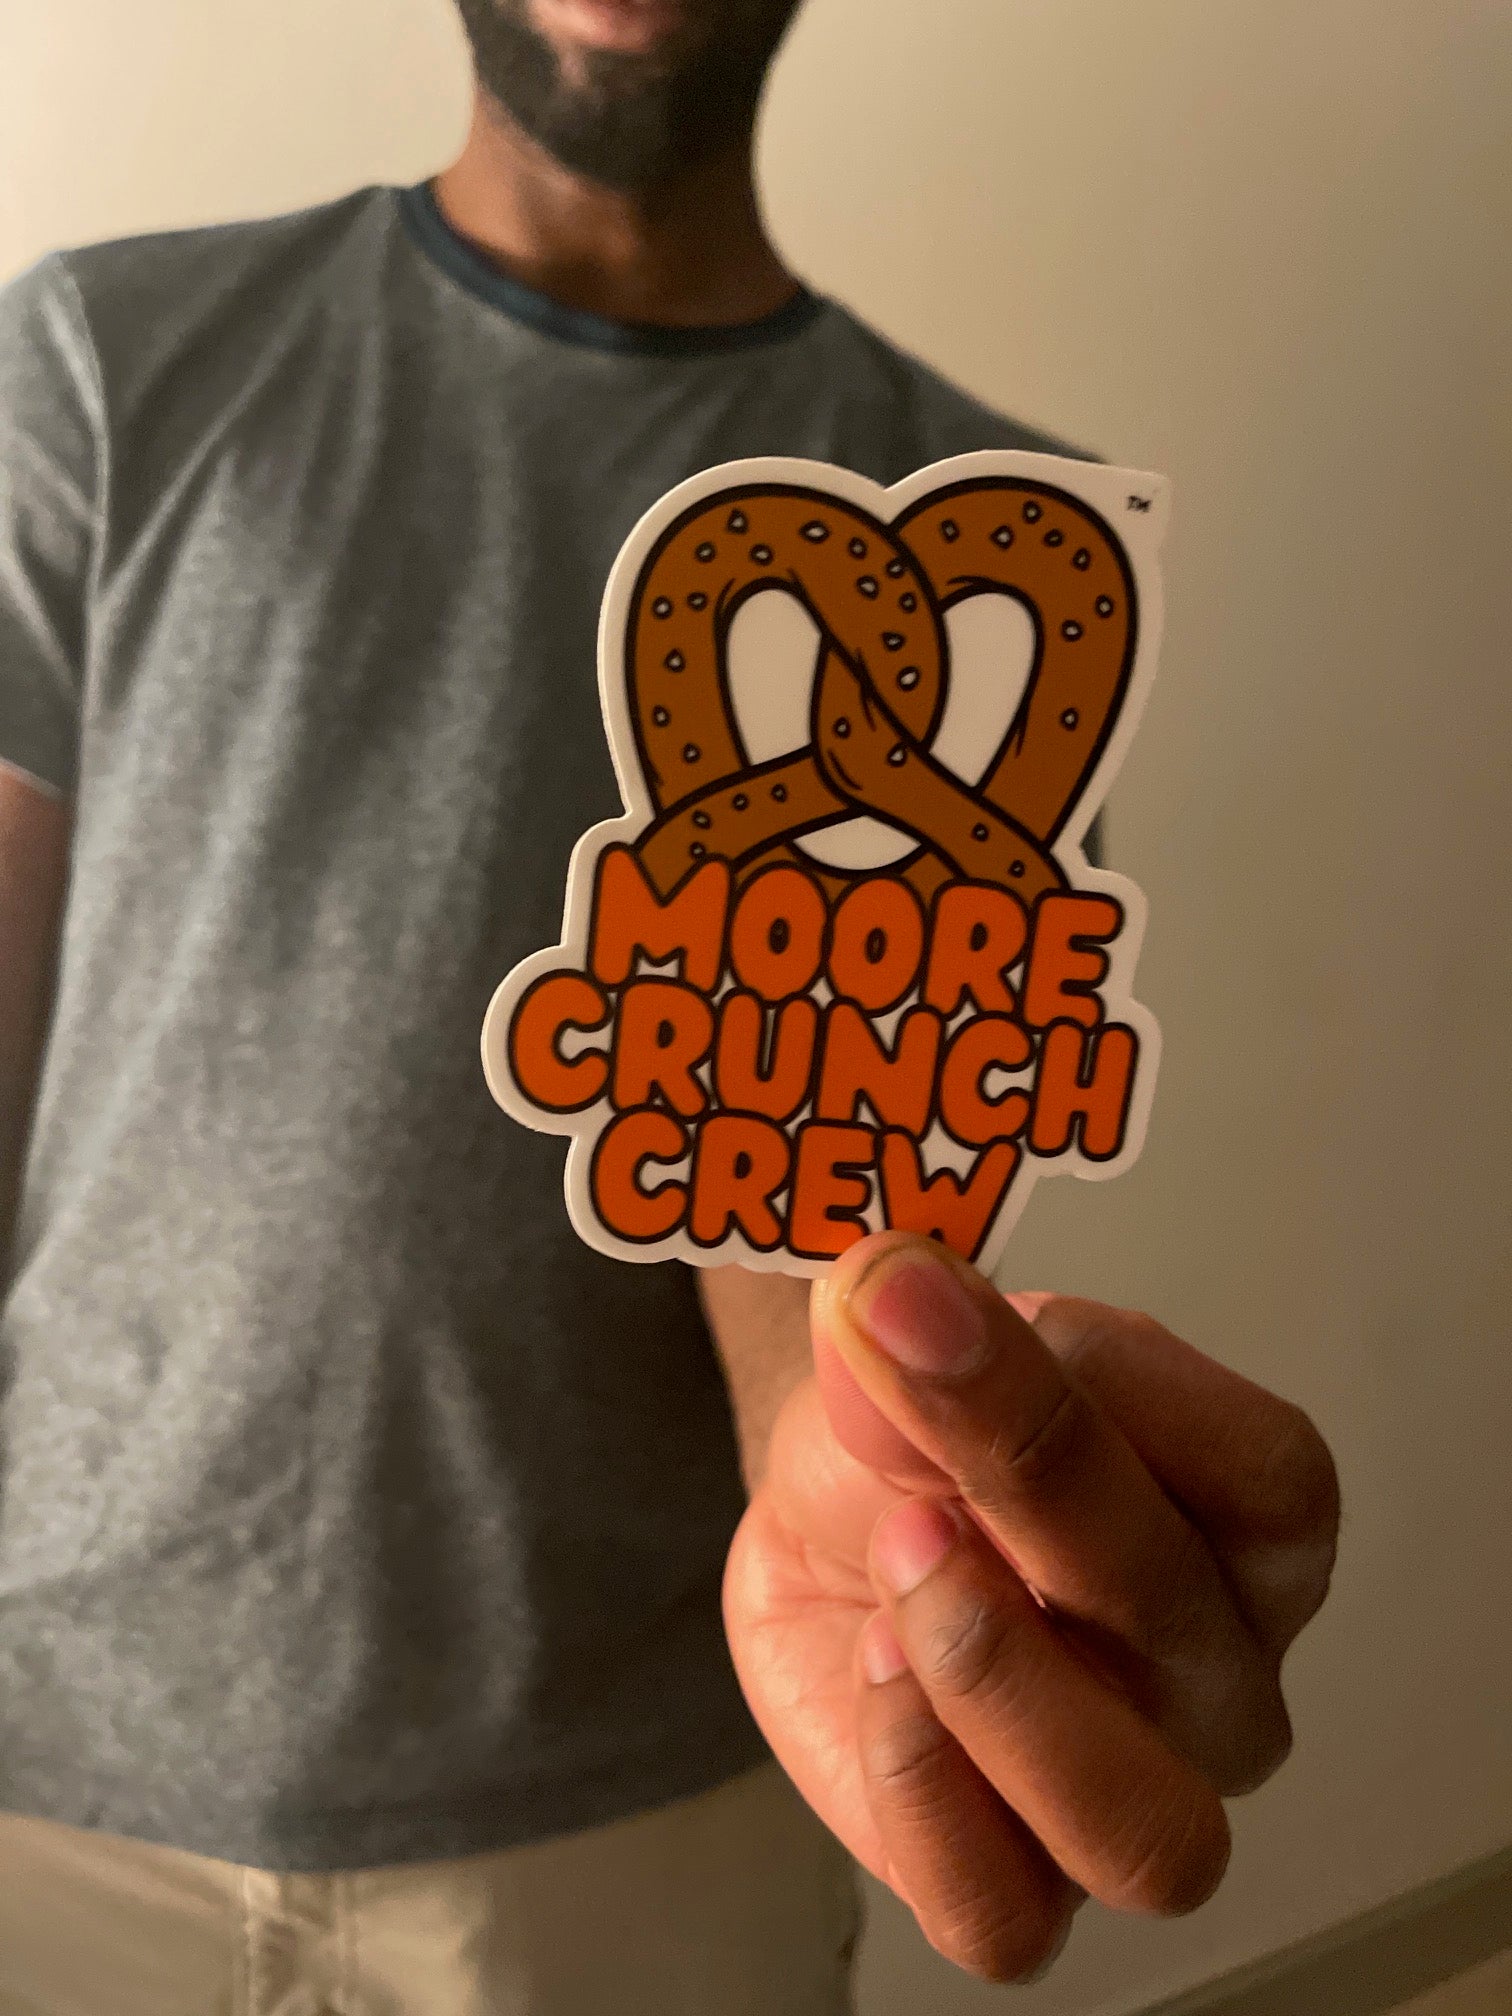 Moore Crunch Crew Sticker